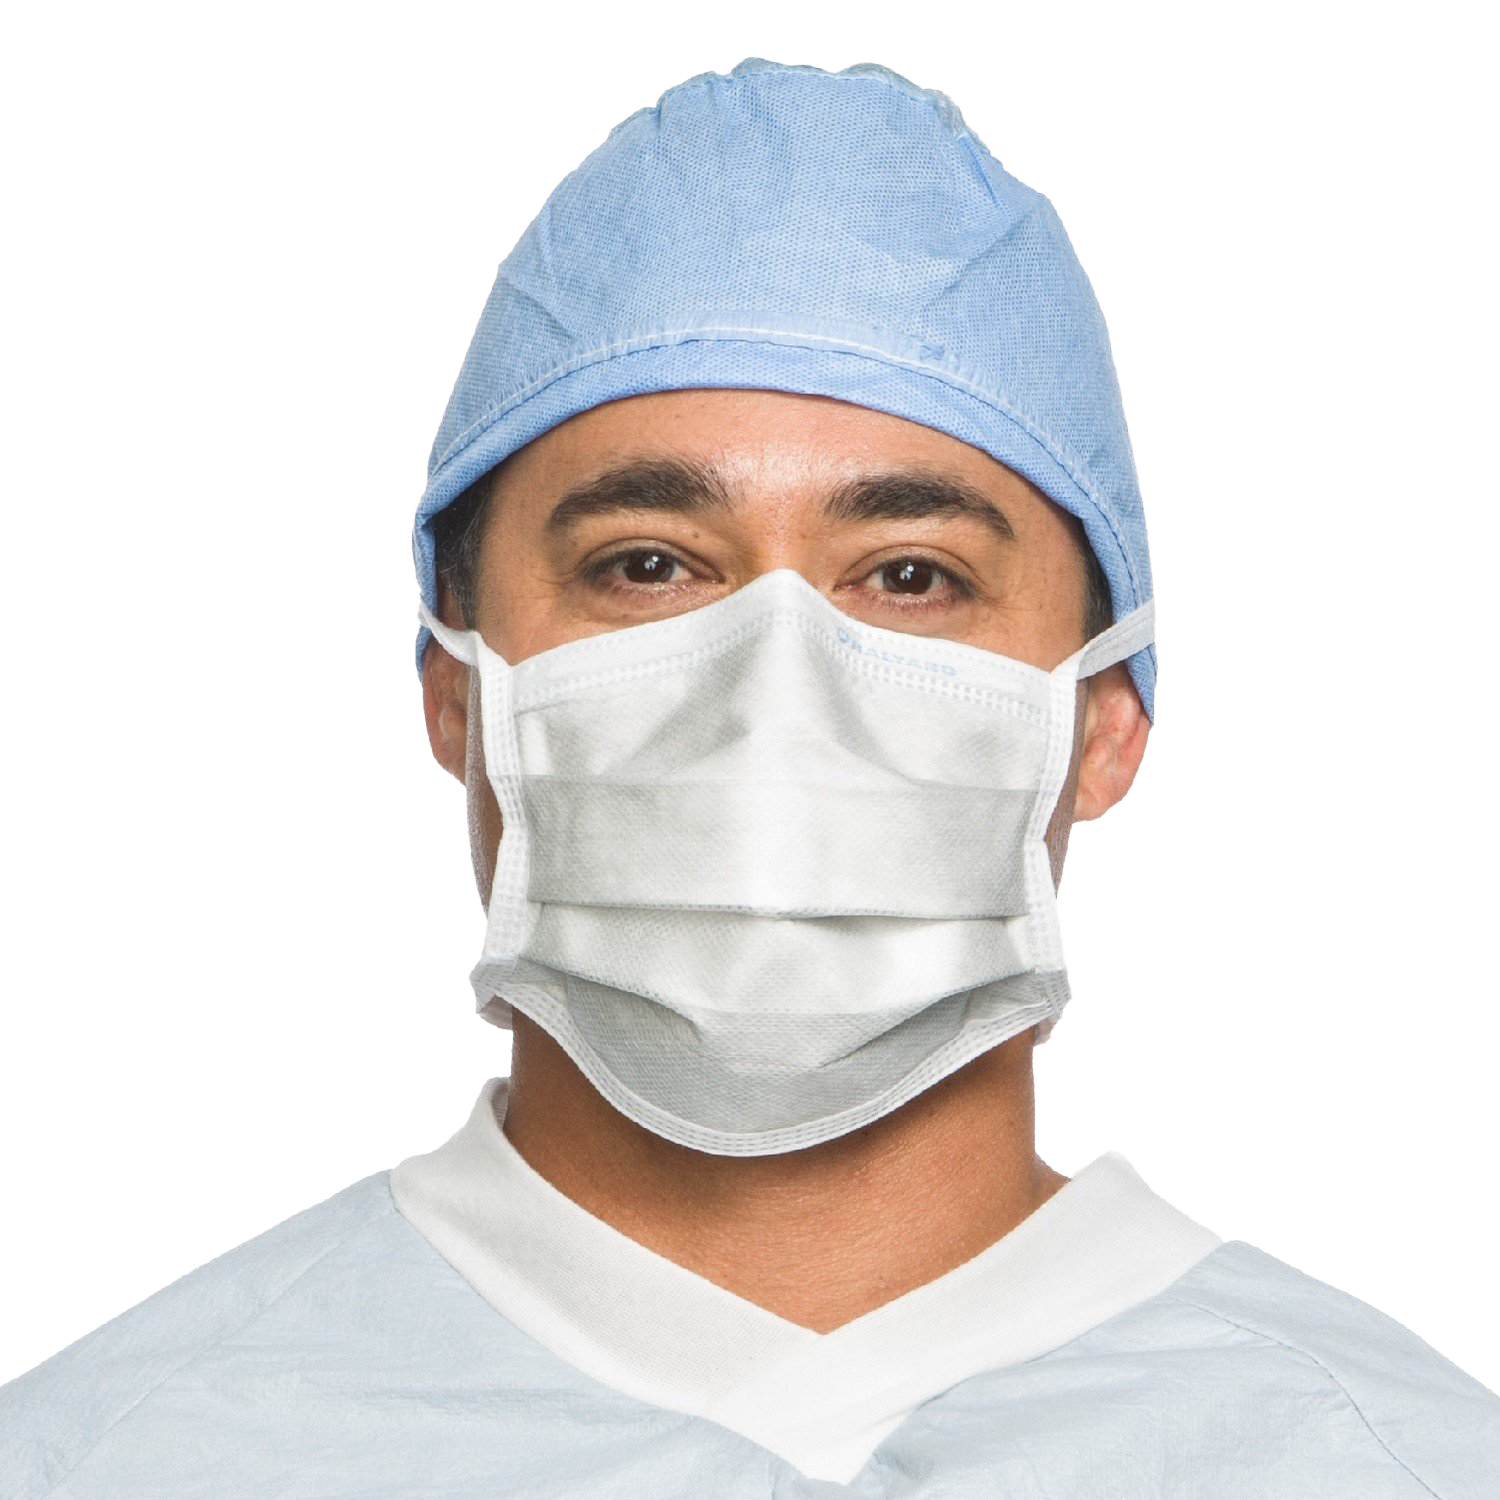 Imagens transparentes de máscara cirúrgica